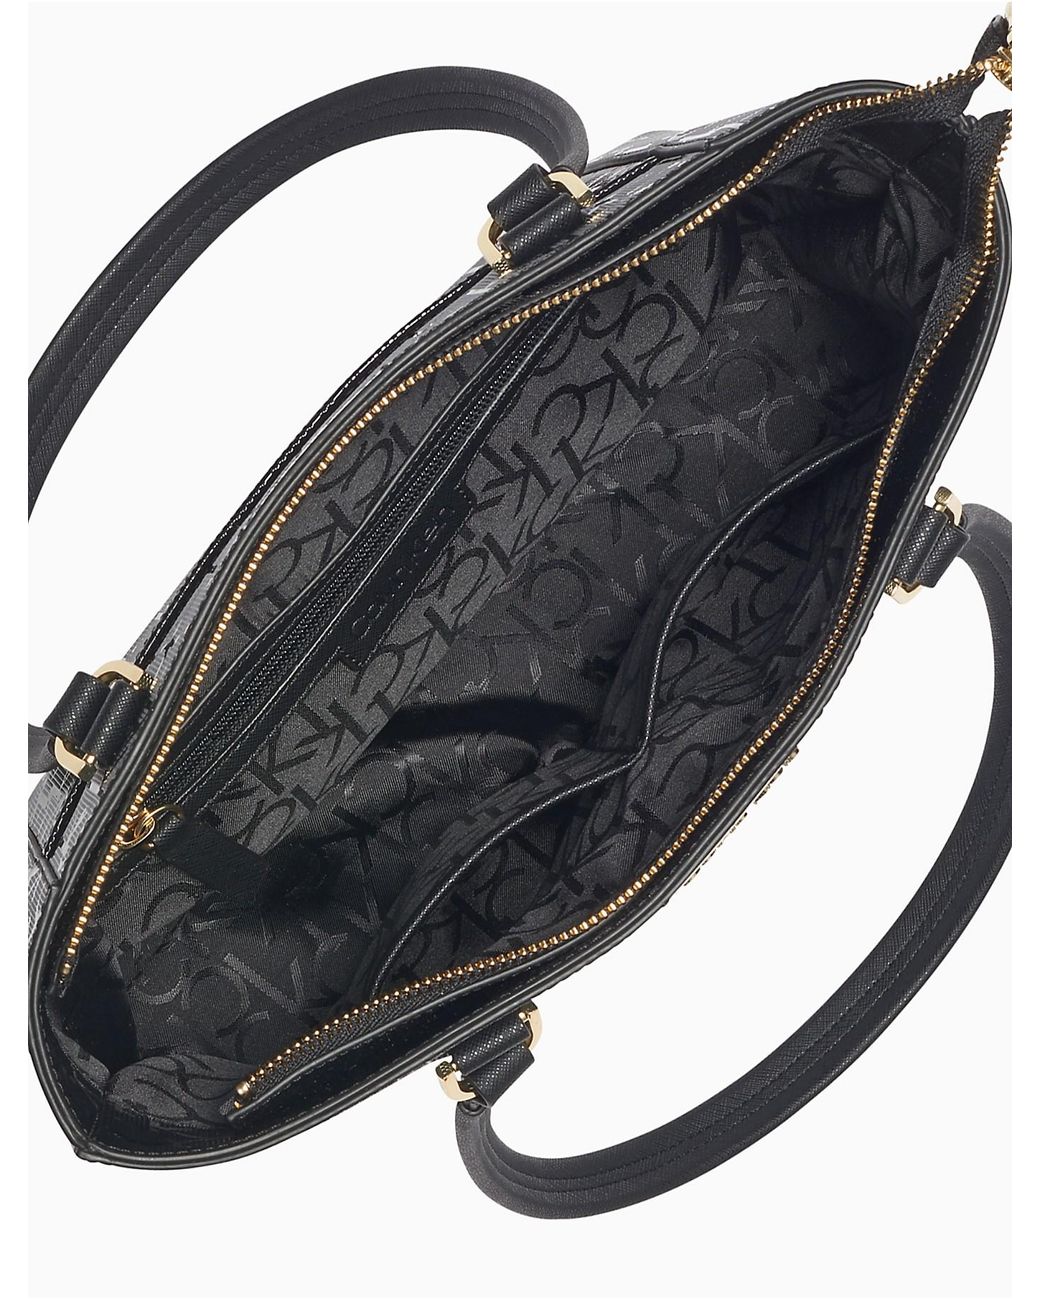 Calvin Klein Purse: Black Monogram Tote Bag